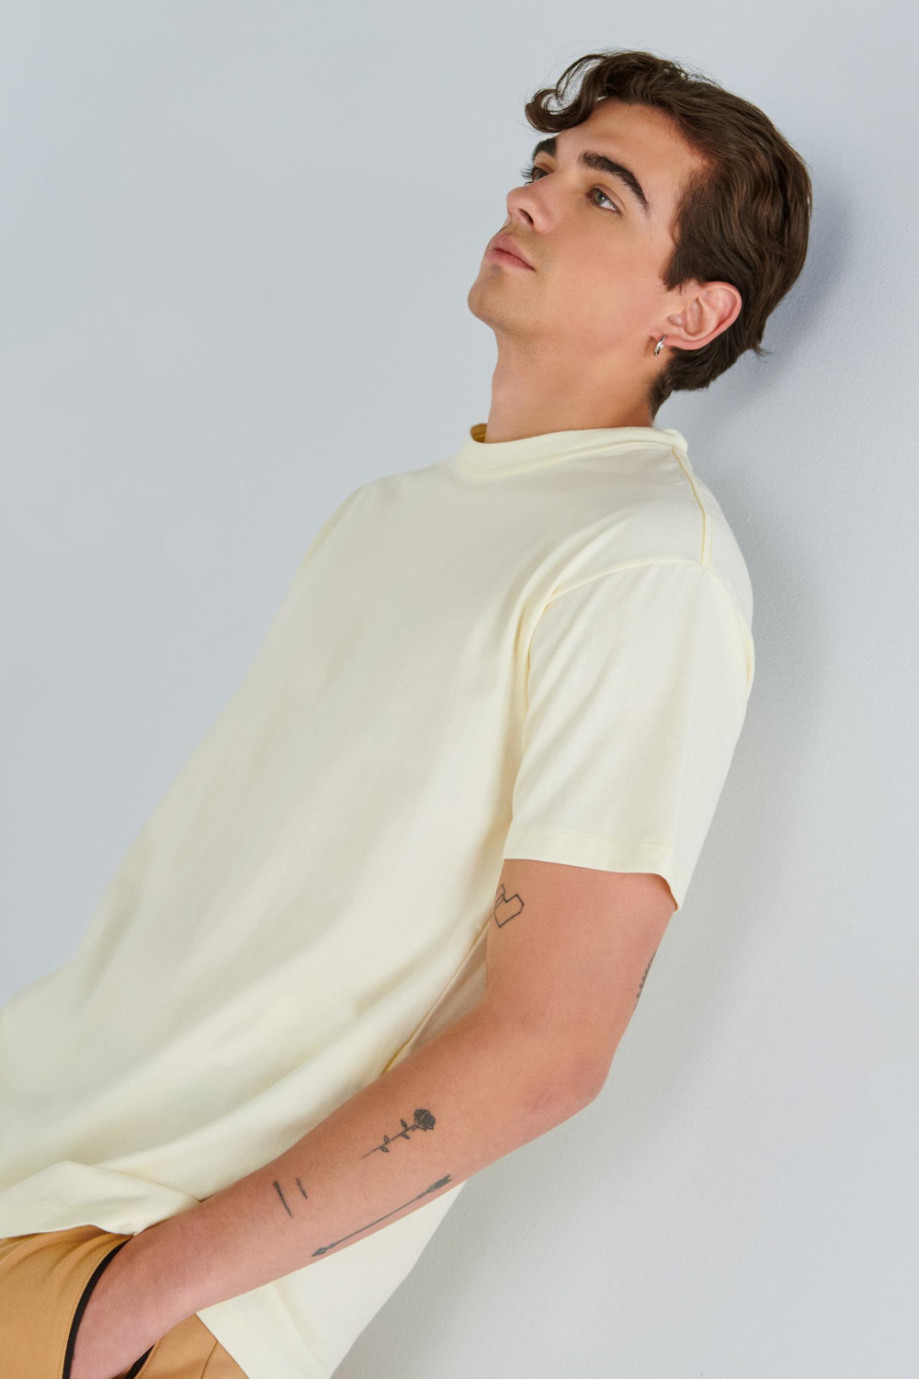 Camiseta unicolor con manga corta y cuello redondo